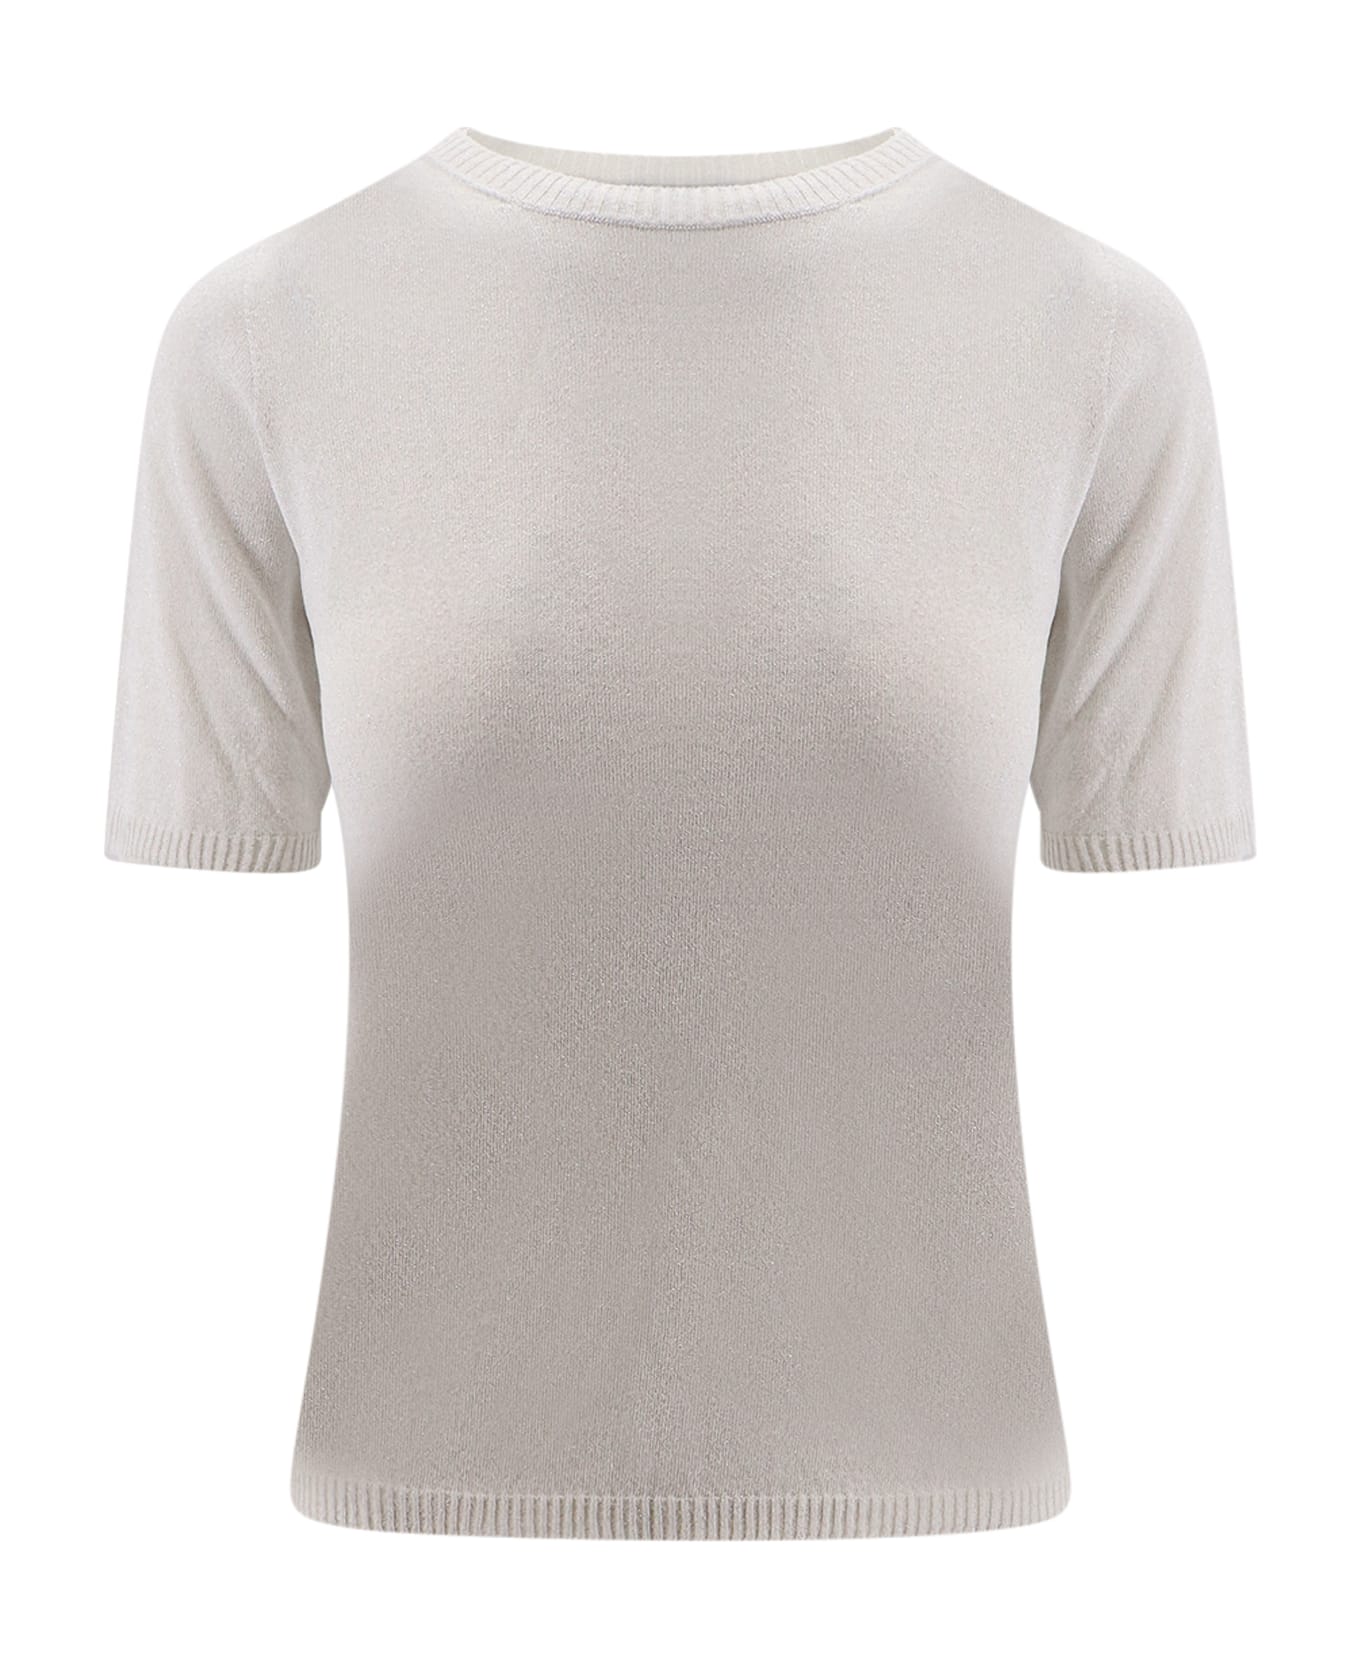 Lardini Top - White Tシャツ